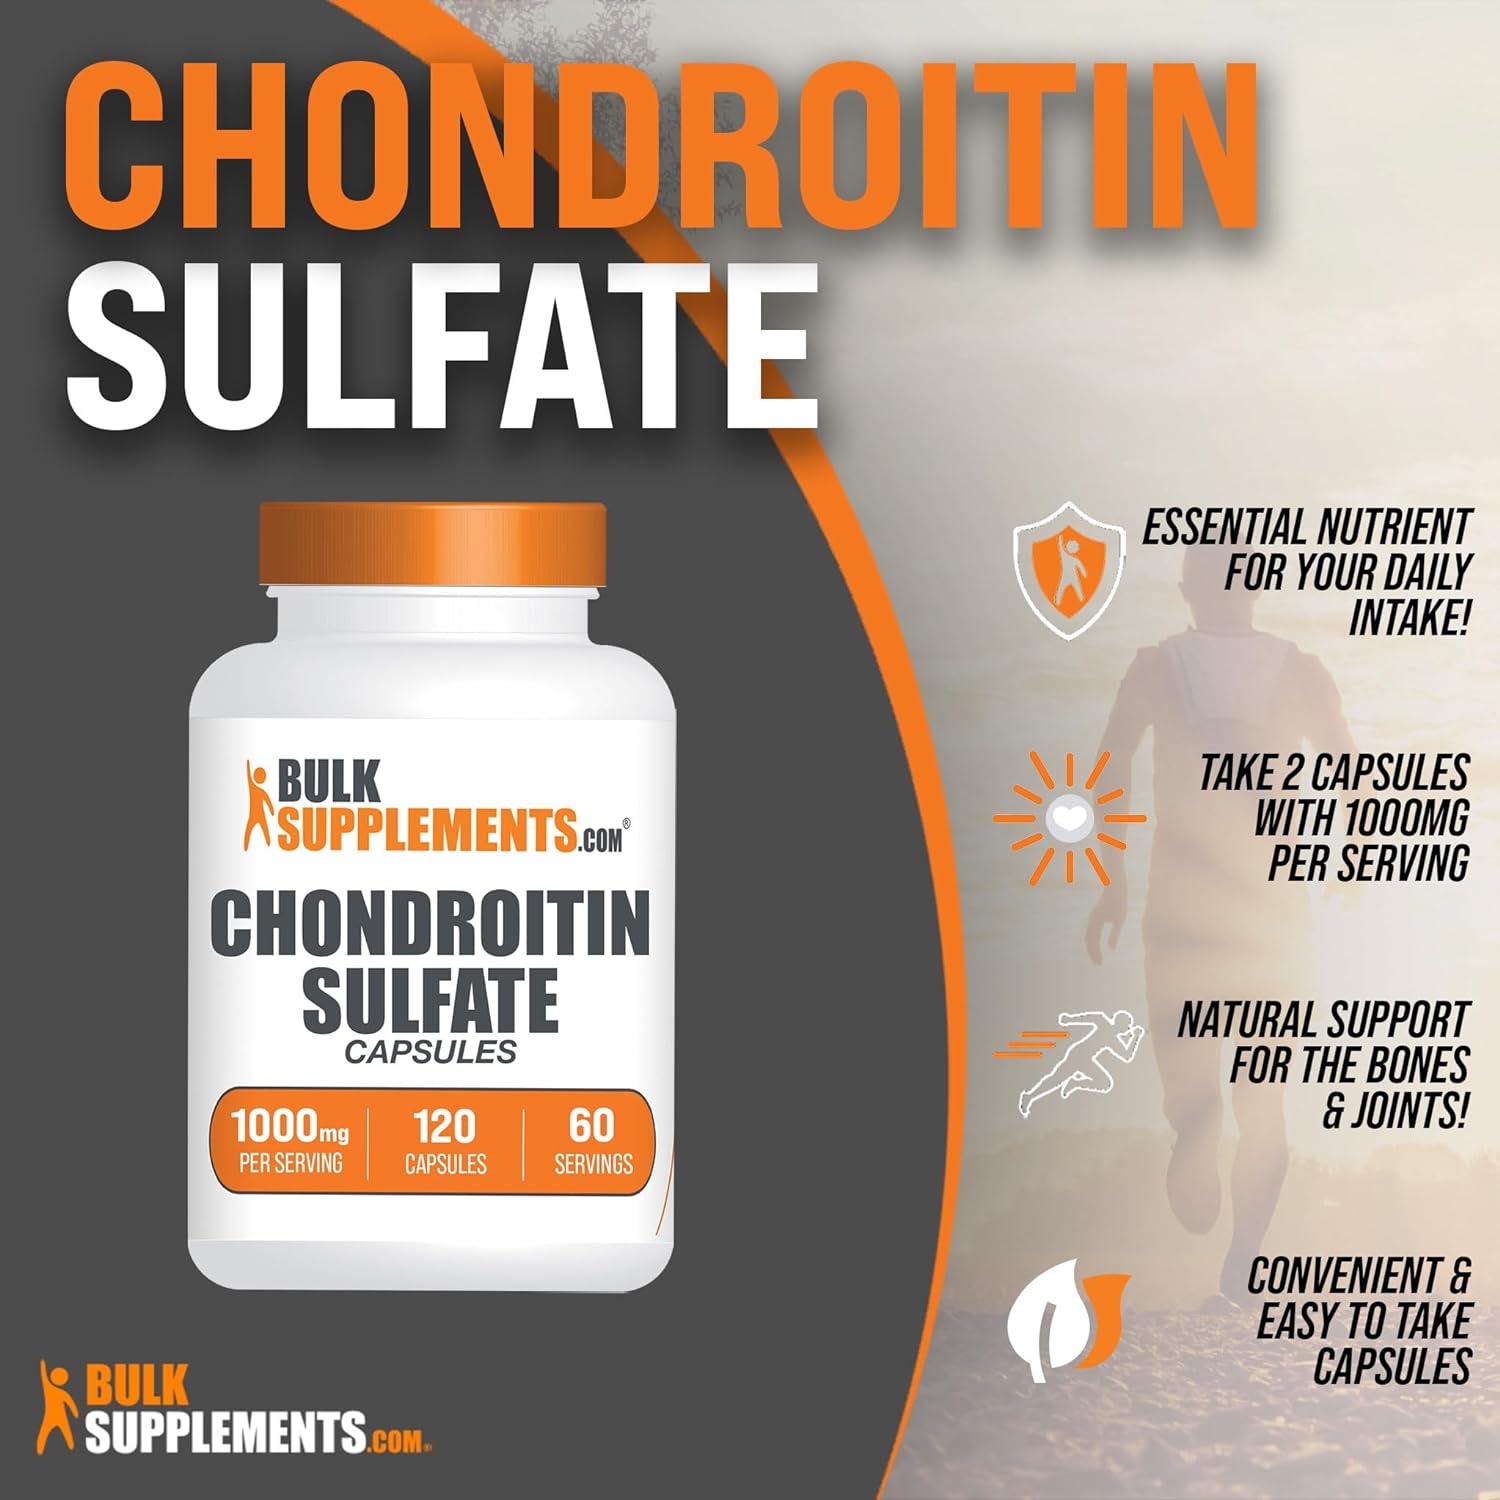 Chondroitin Sulfate Capsules